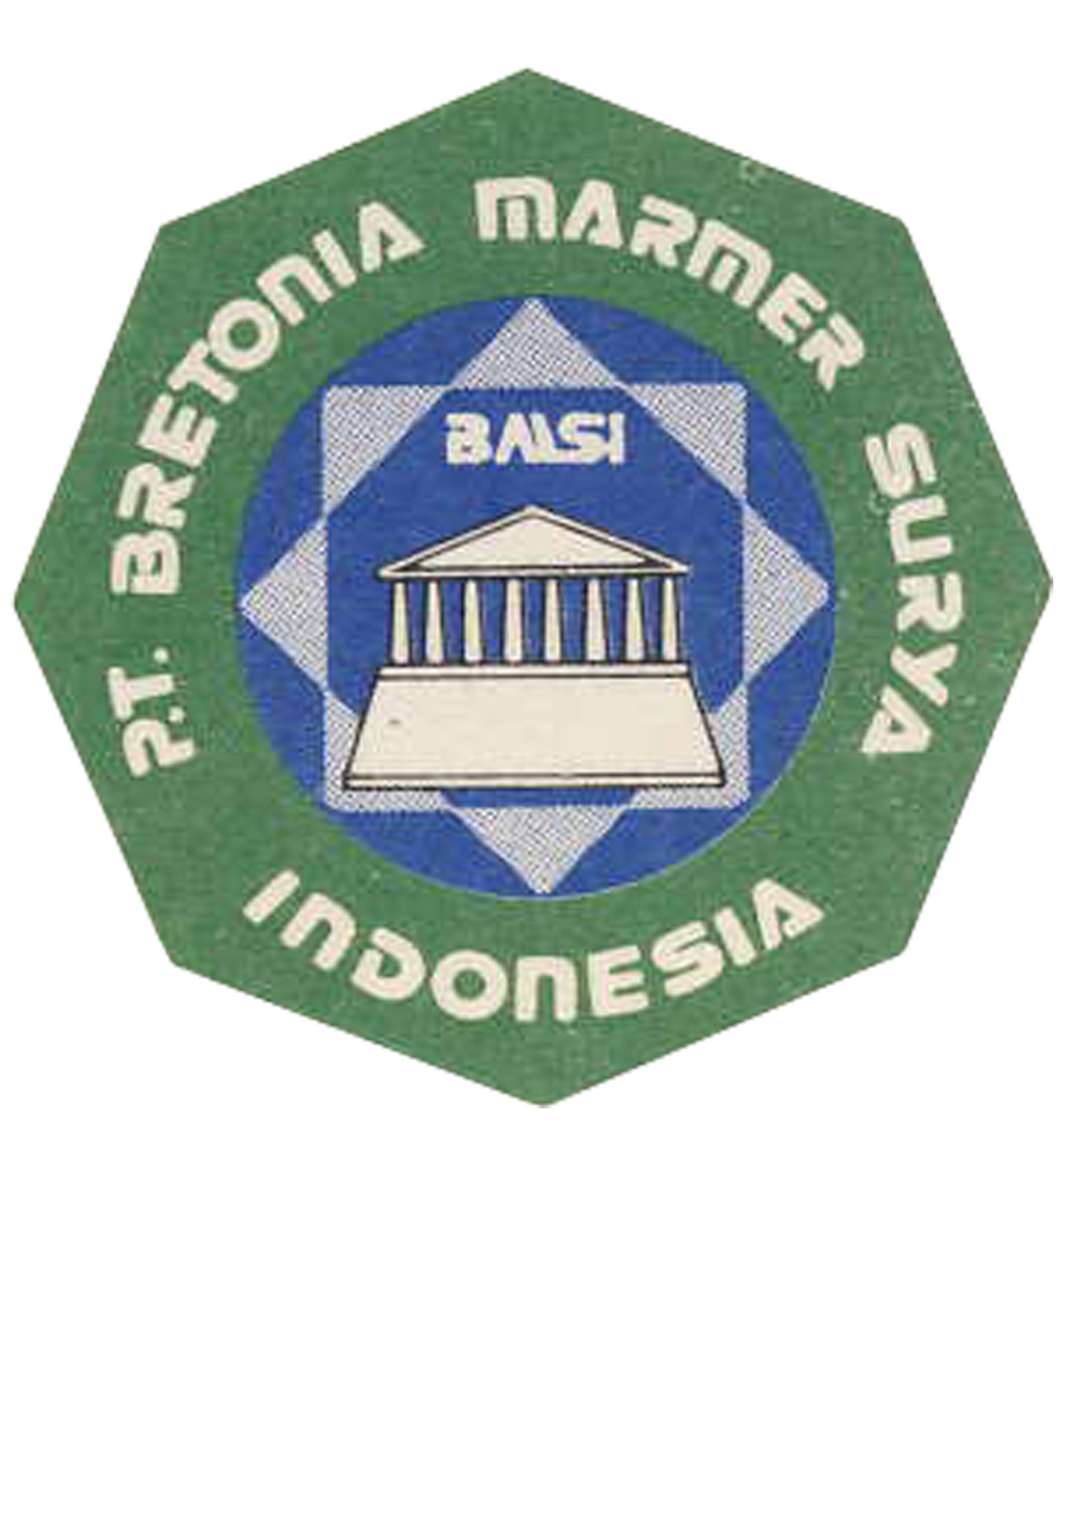 PT. Bretonia Marmer Surya Indonesia